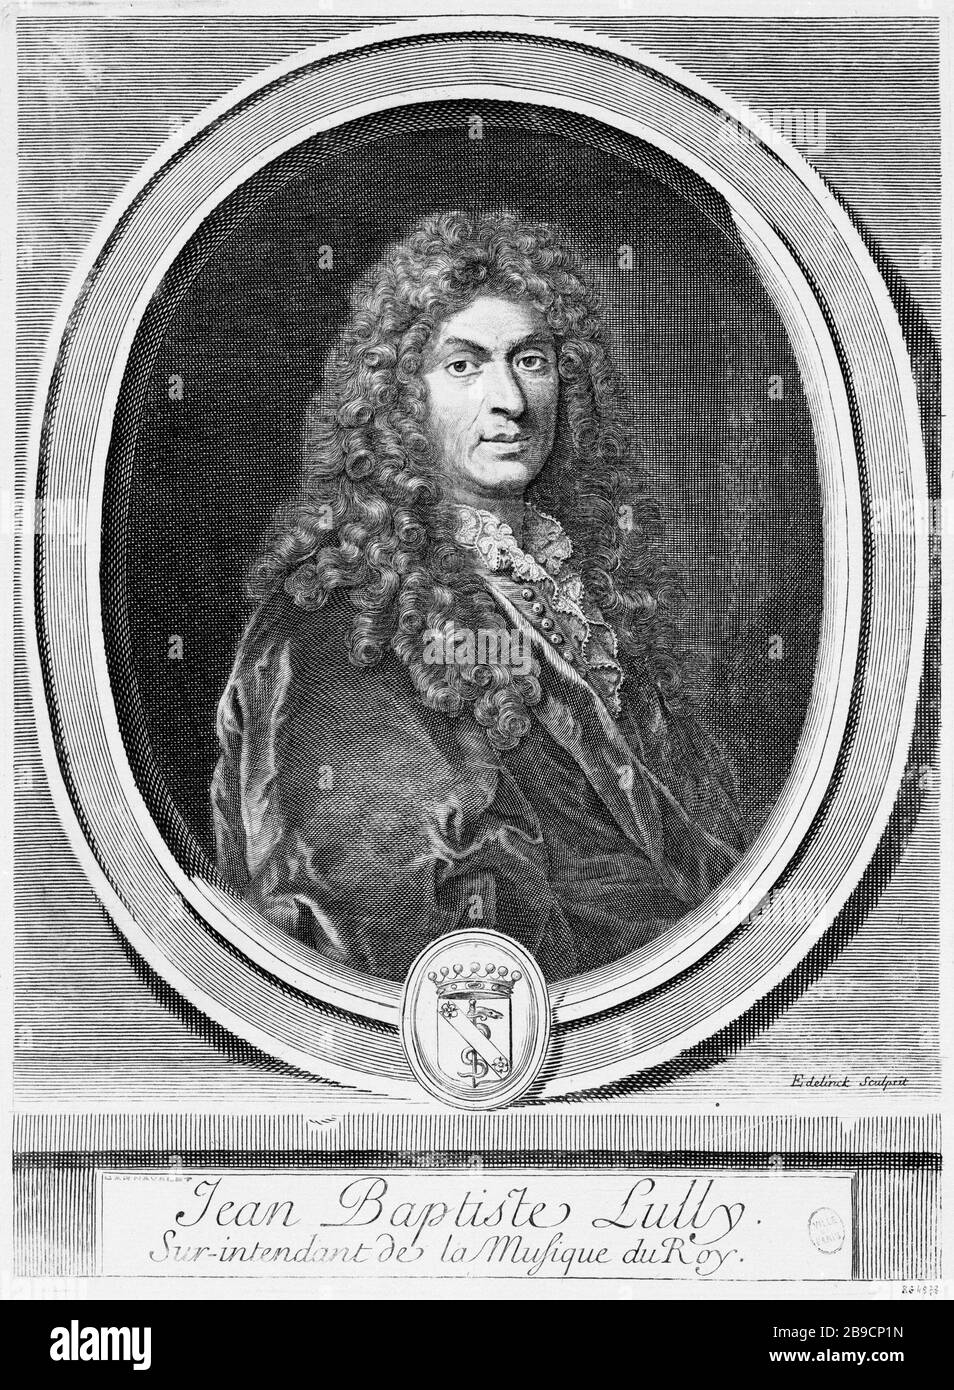 JEAN-BAPTISTE LULLI DI Edelinck Jean-Baptiste Lulli (1632-1687), compositeur français. Gravure d'Edelinck. Parigi, musée Carnavalet. Foto Stock